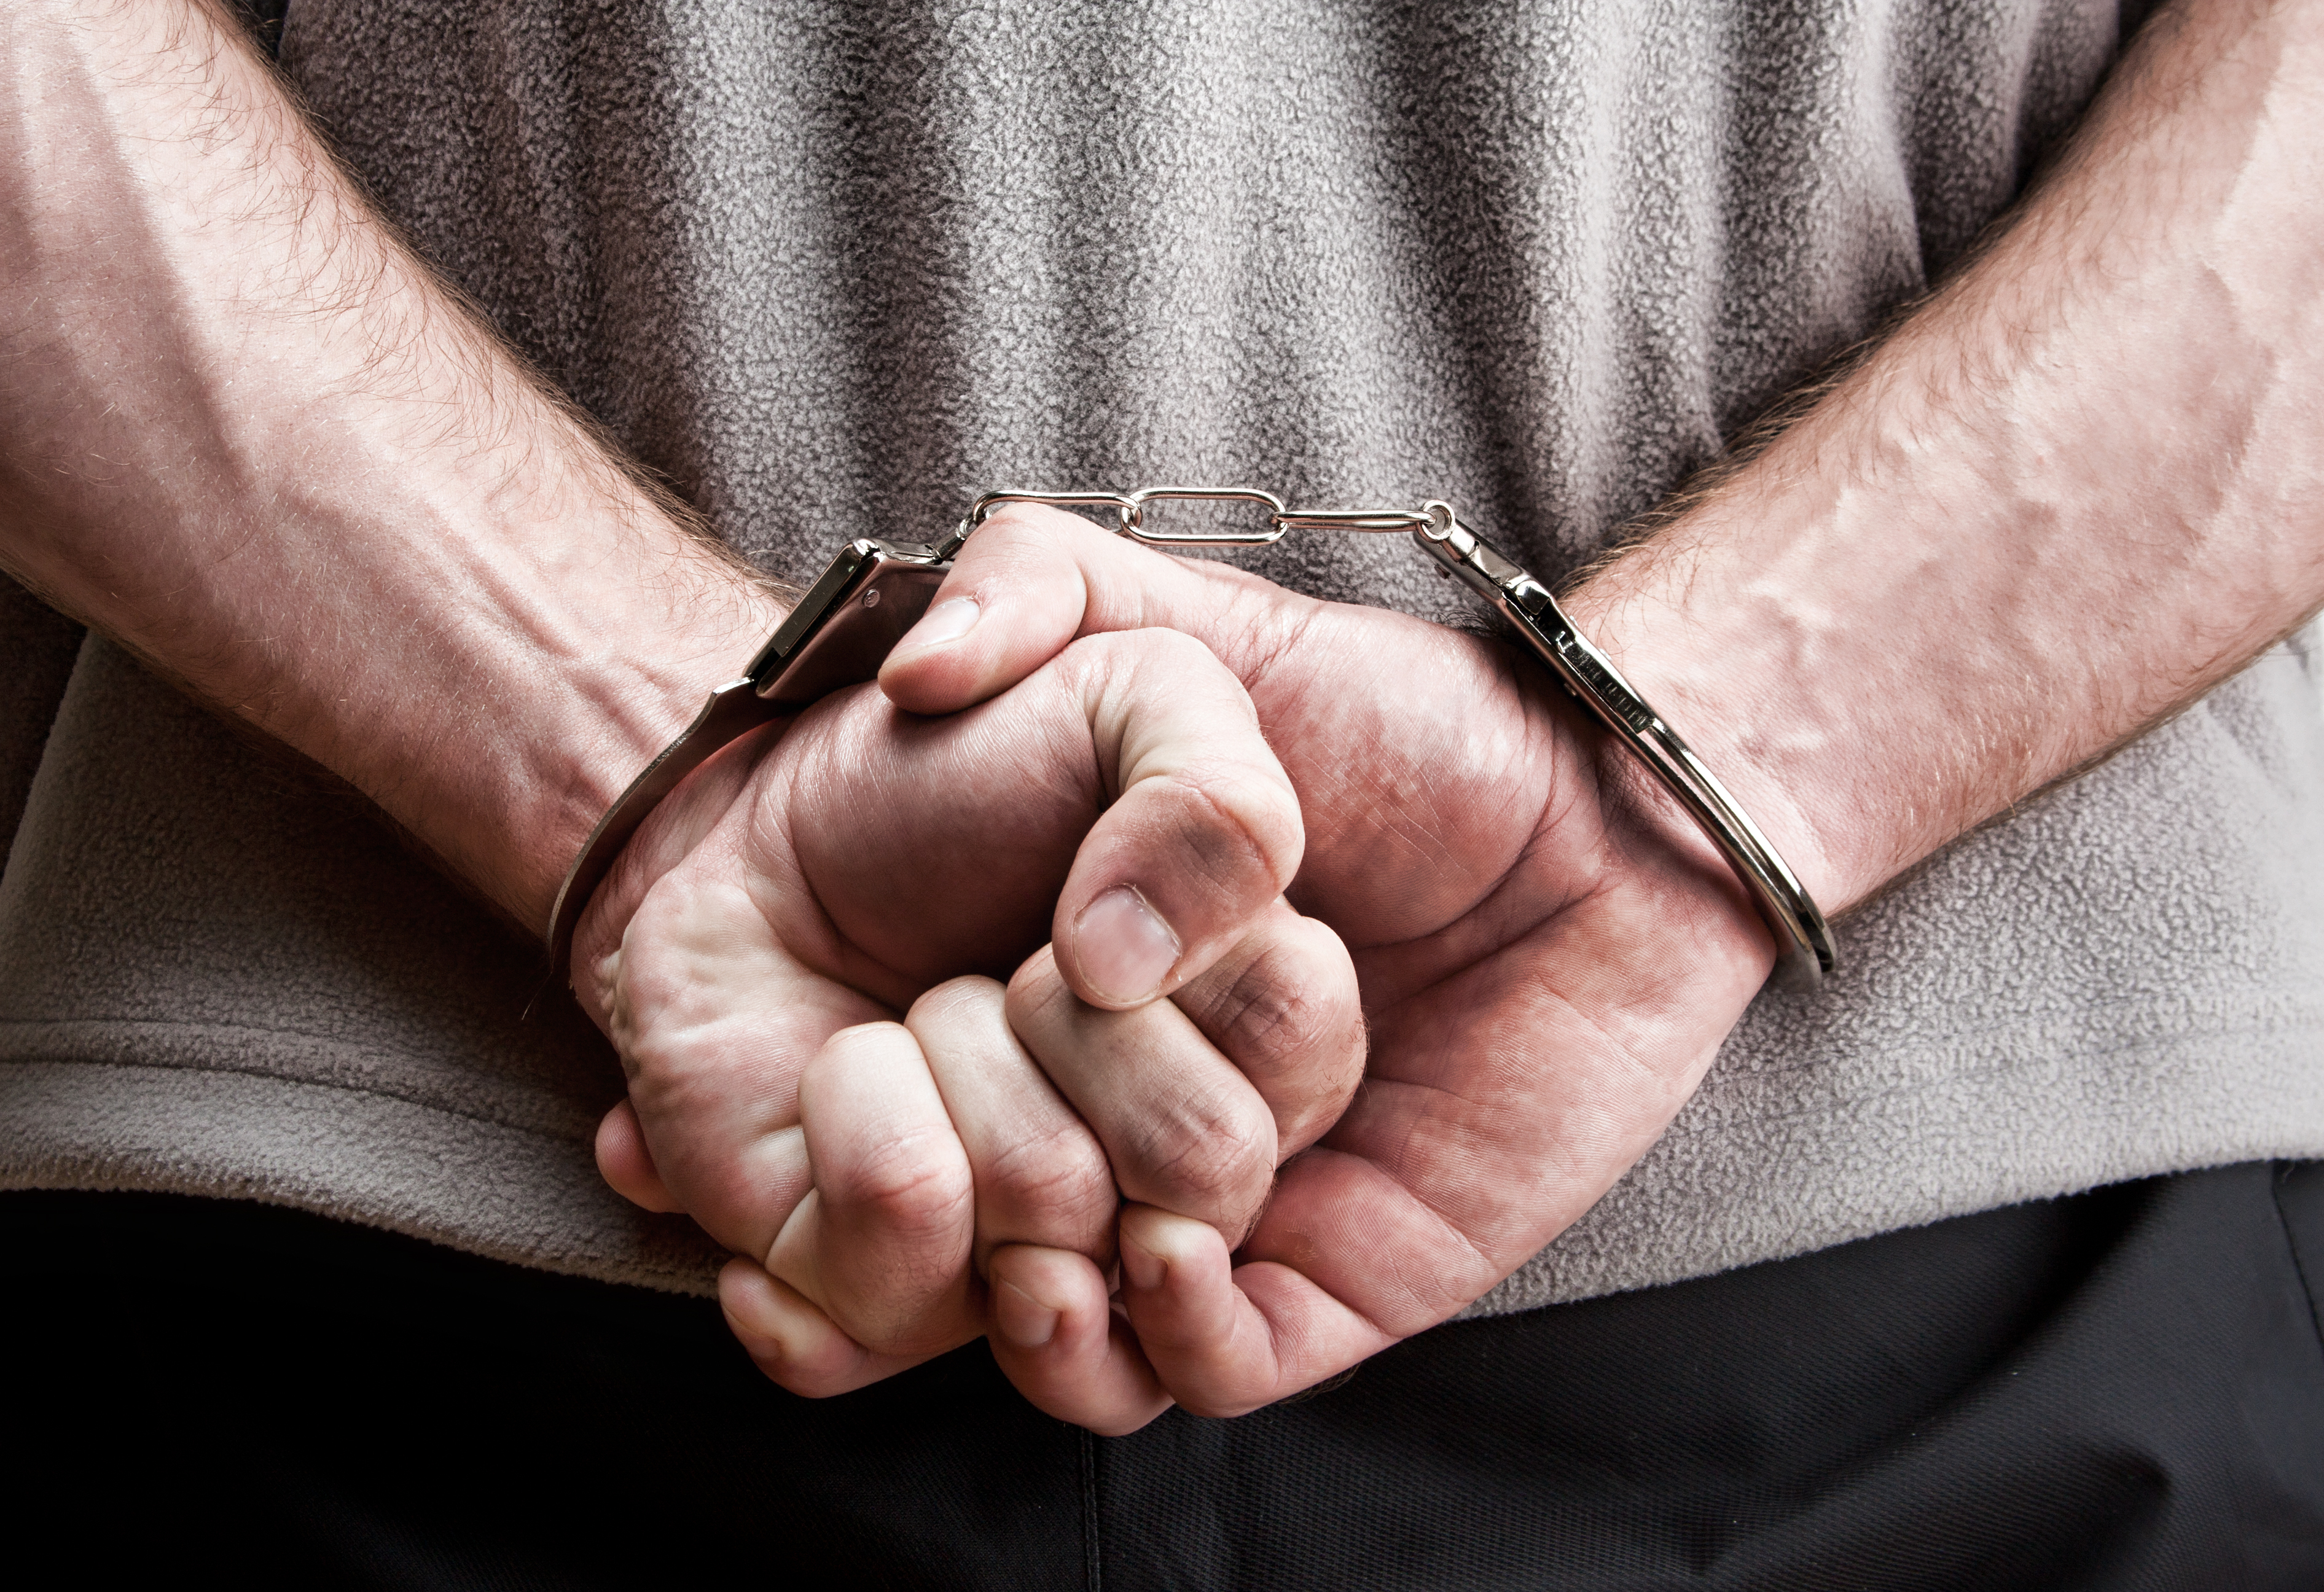 Criminal hands locked in handcuffs. | Source: Shutterstock